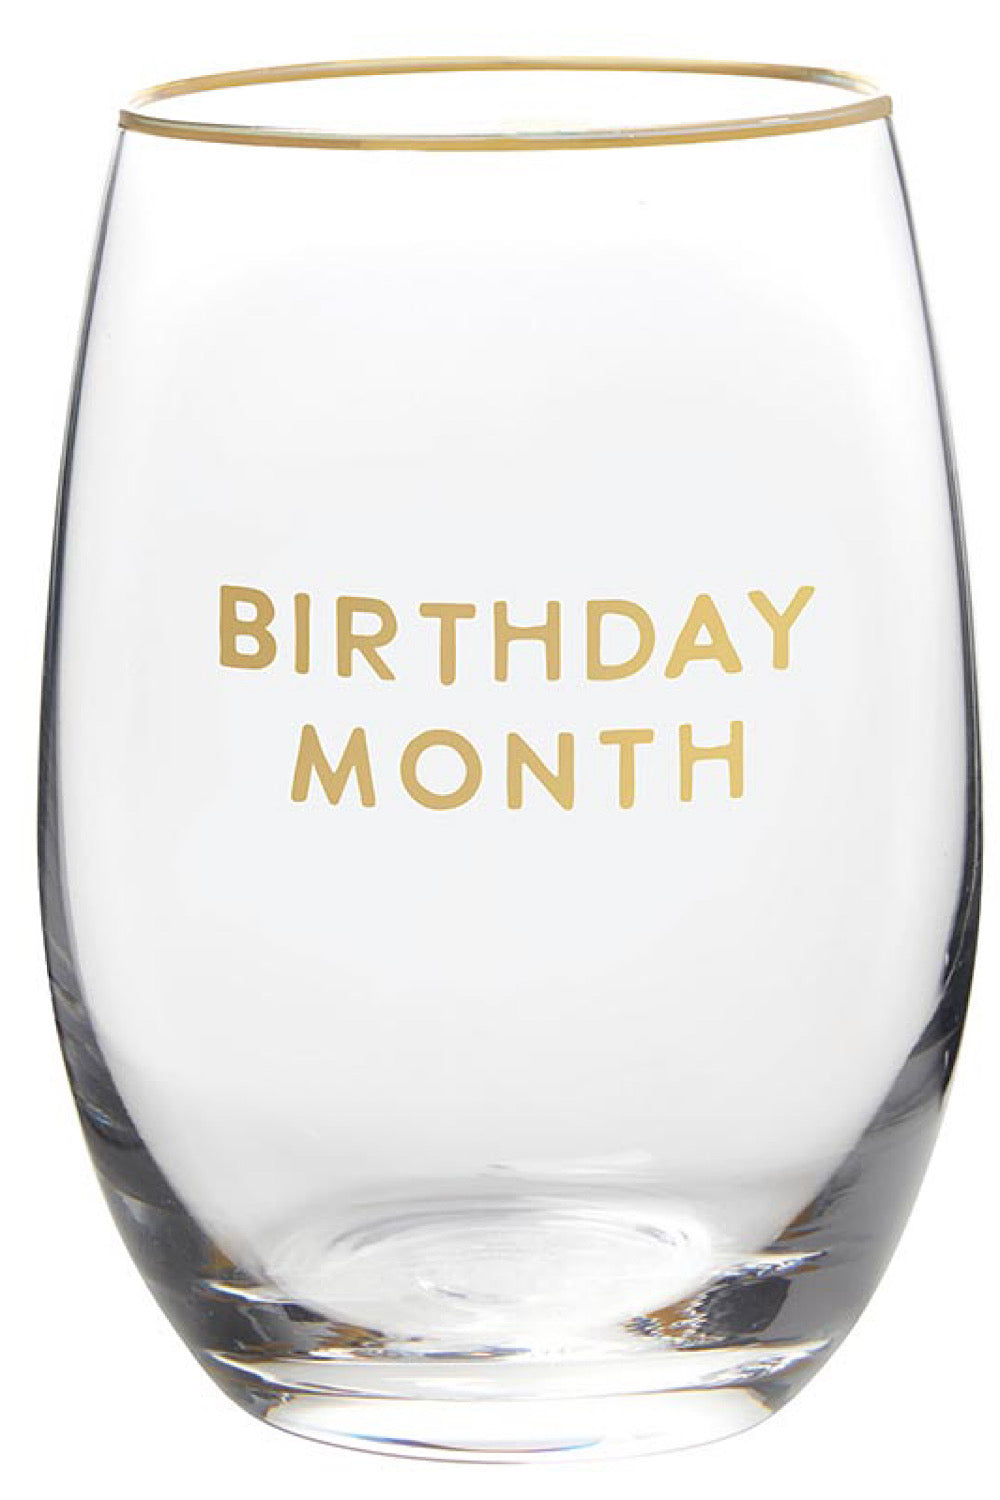 BIRTHDAY MONTH WINE GLASS